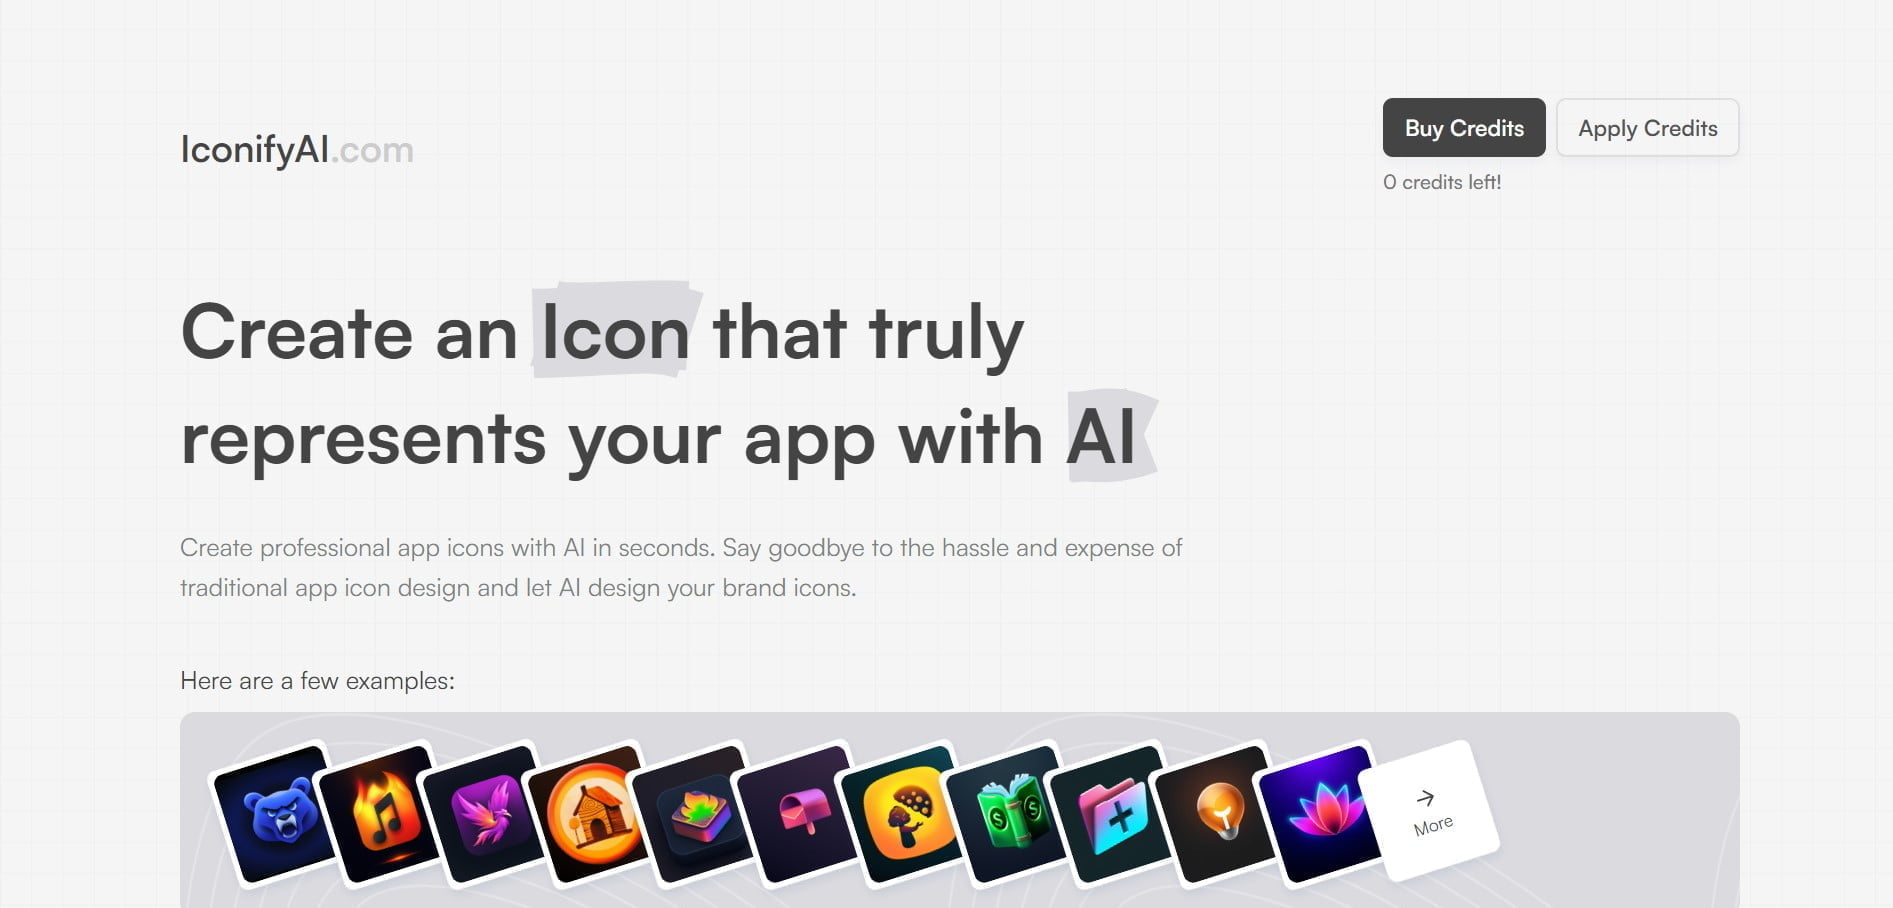 IconifyAI - AI Icon Creator Tool for Mobile Apps - Trending AI Tools